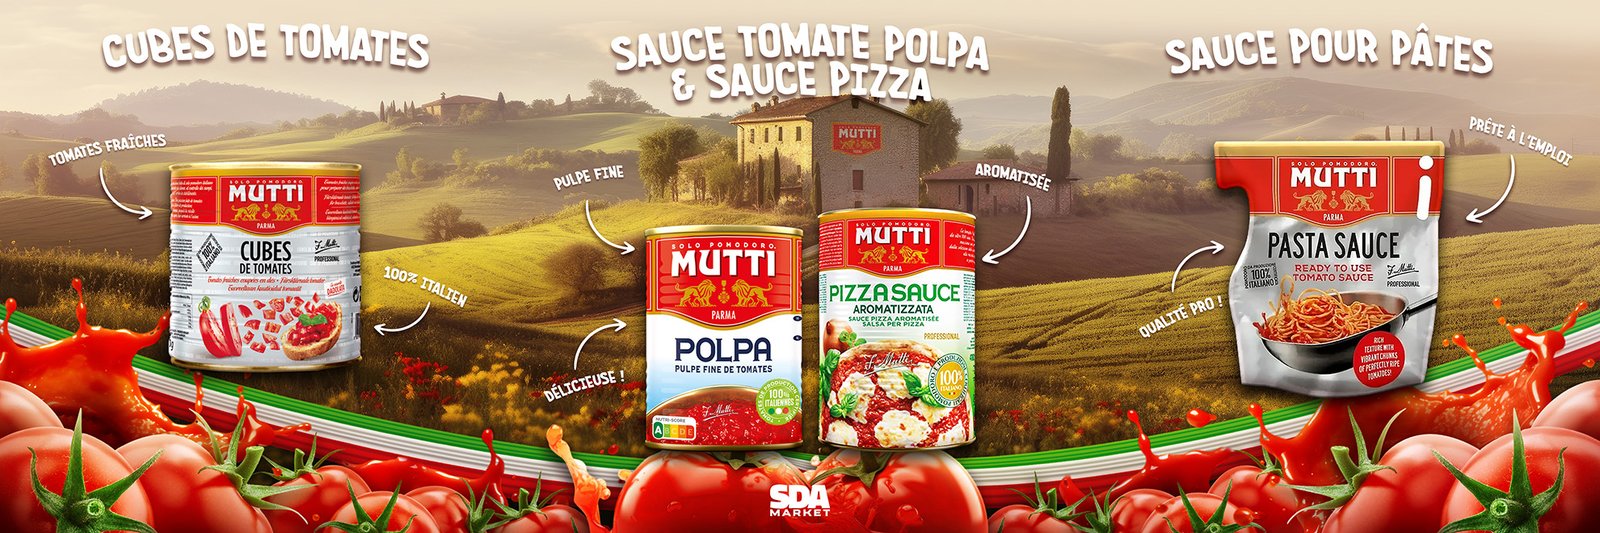 bannière Mutti, sauce tomate, SDA Market